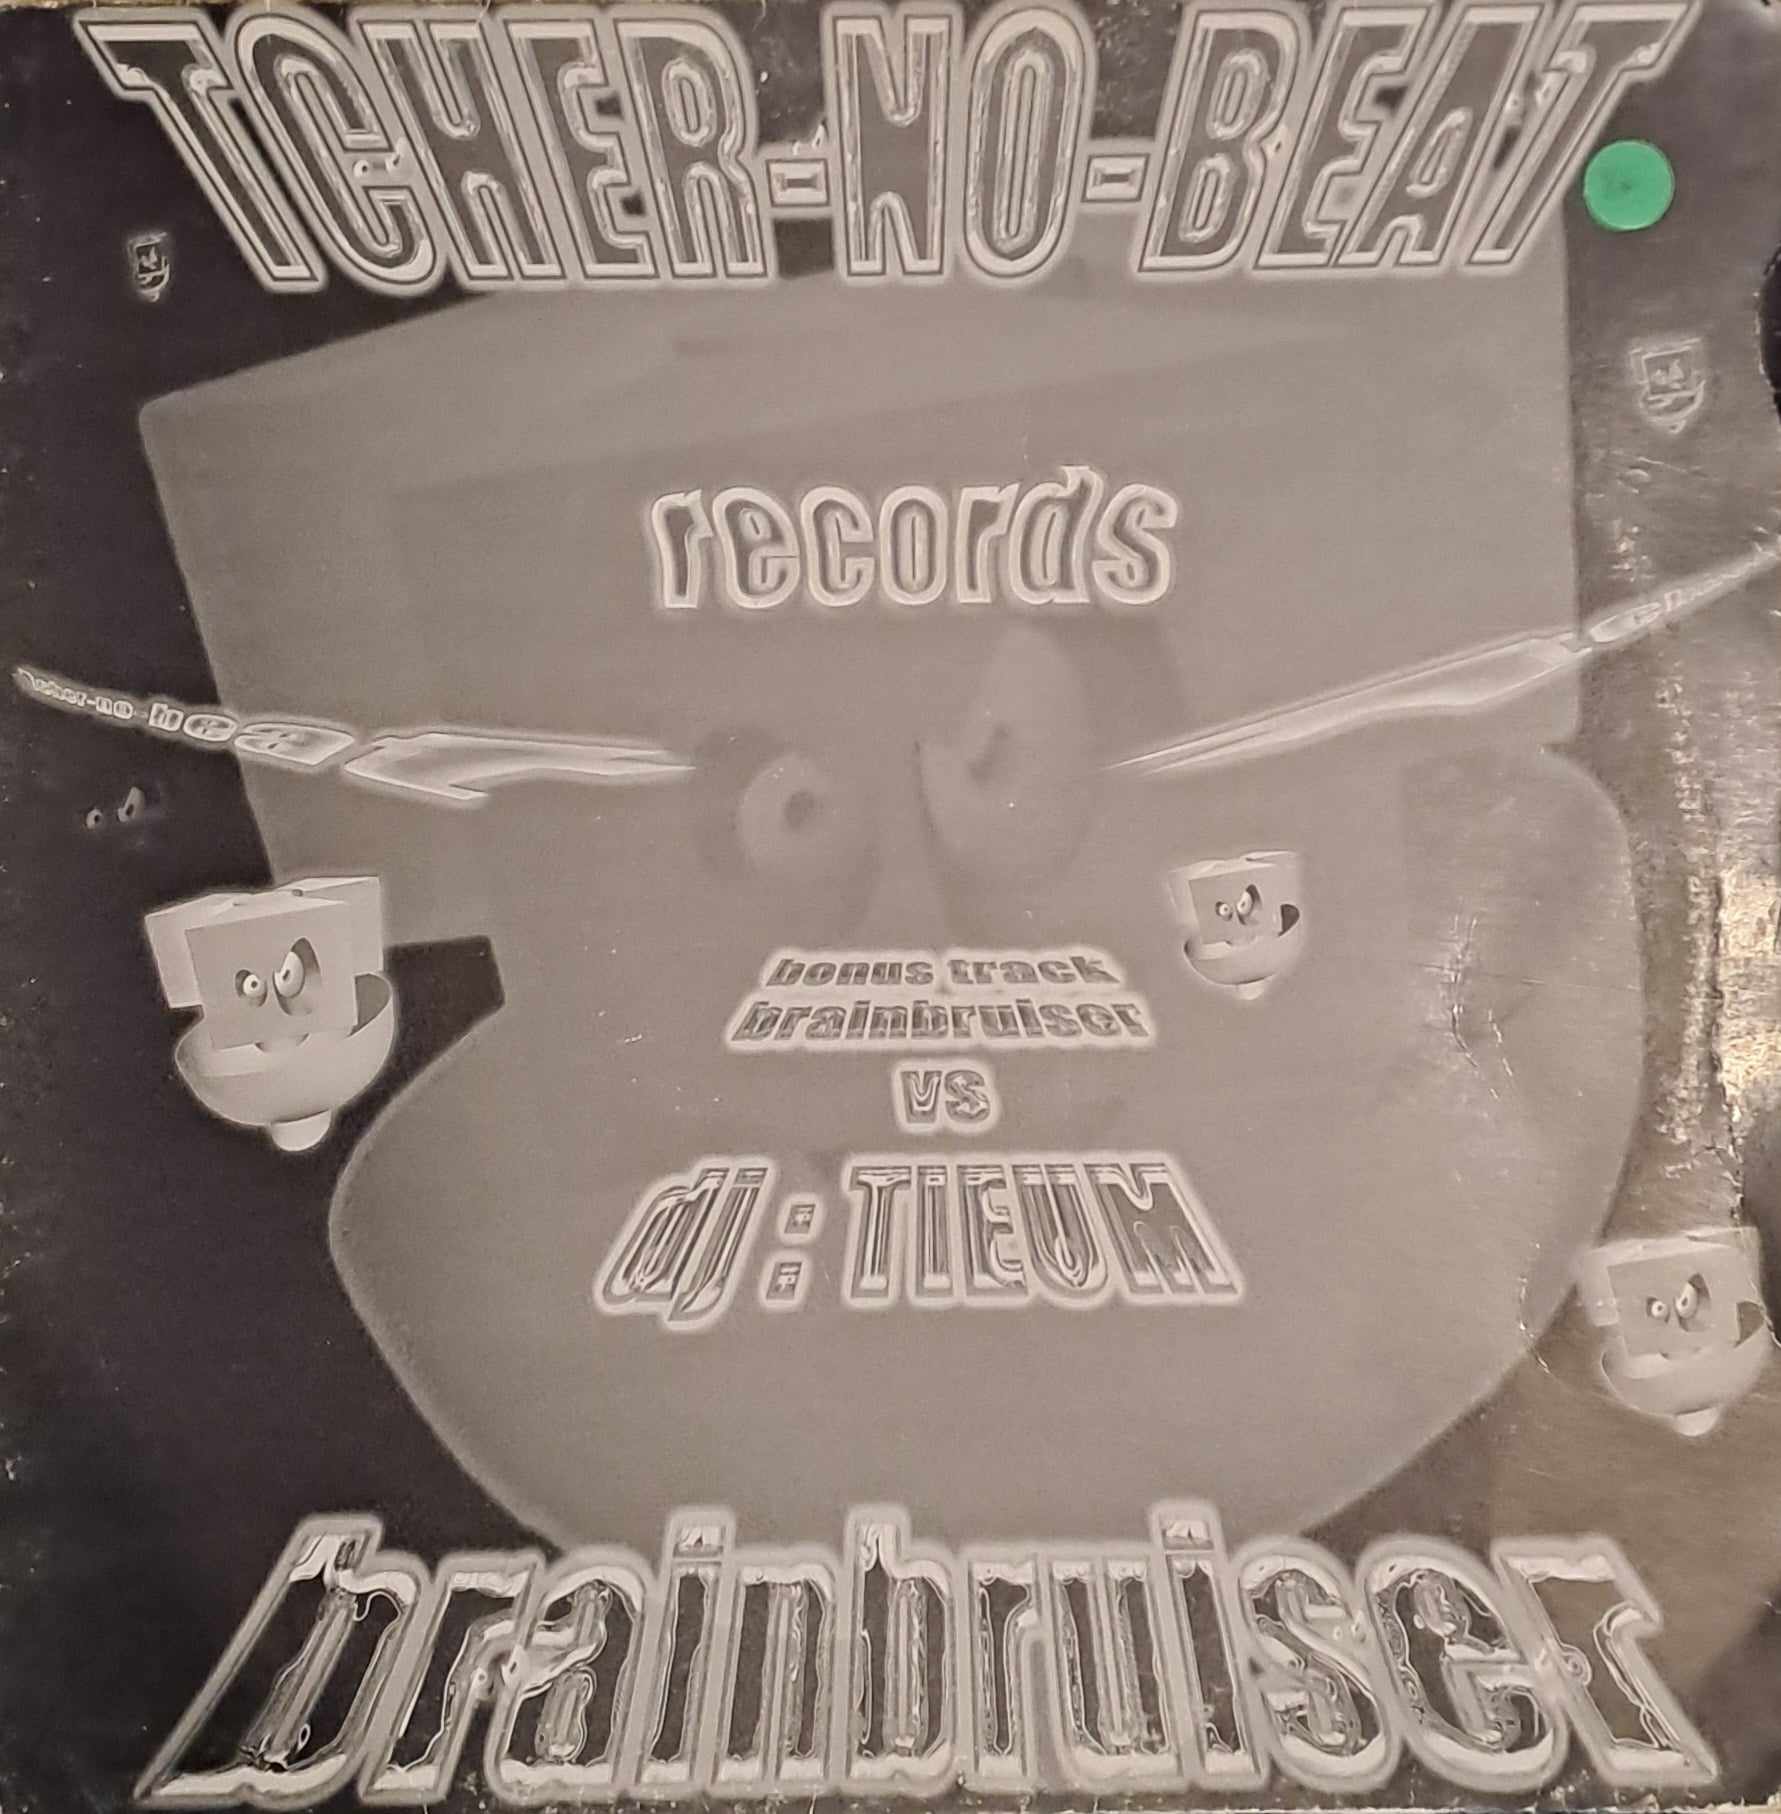 Tcher No Beat 08 - vinyle hardcore